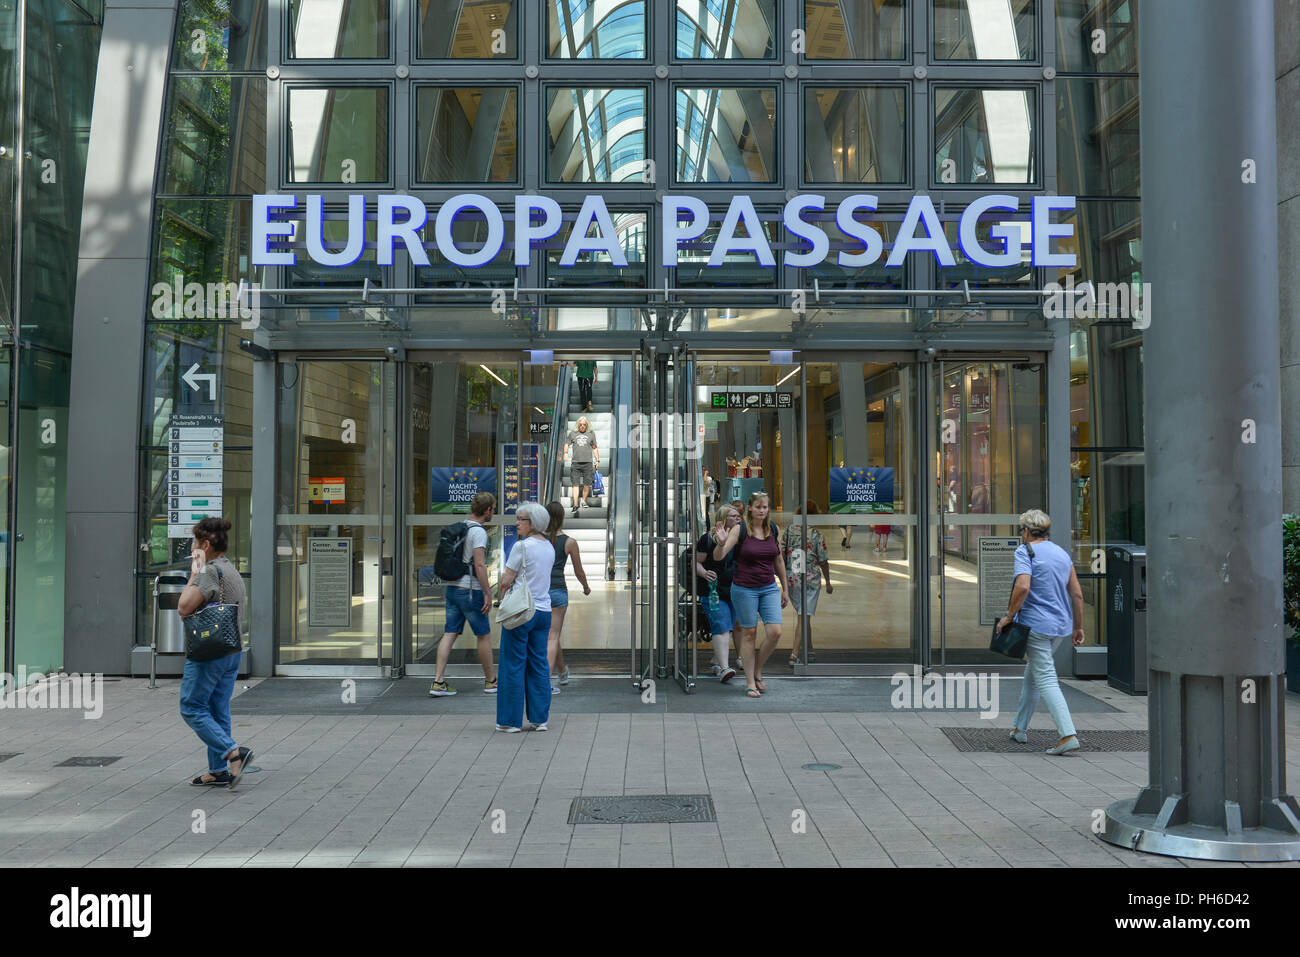 Europa Passage, Ballindamm, Hamburg, Deutschland Stock Photo